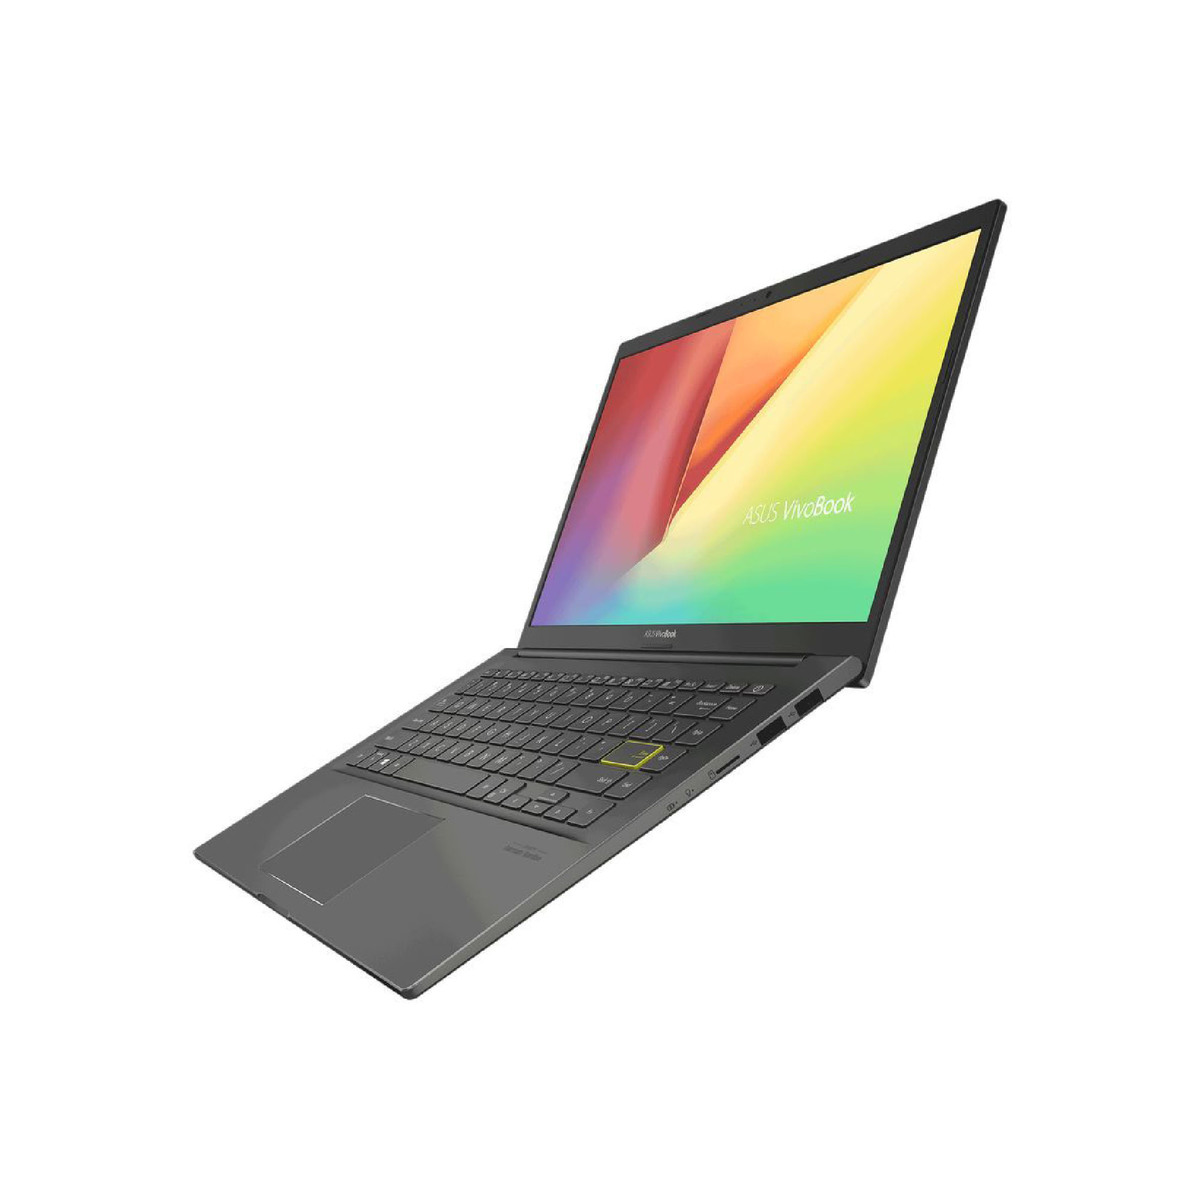 Asus Notebook K413EQ-EB349,Intel Core i5-1135G7,8GB RAM,512GB SSD,2GB NVIDIA GeForce MX350,14-inch FHD,Windows 10,English/Arabic Keyboard